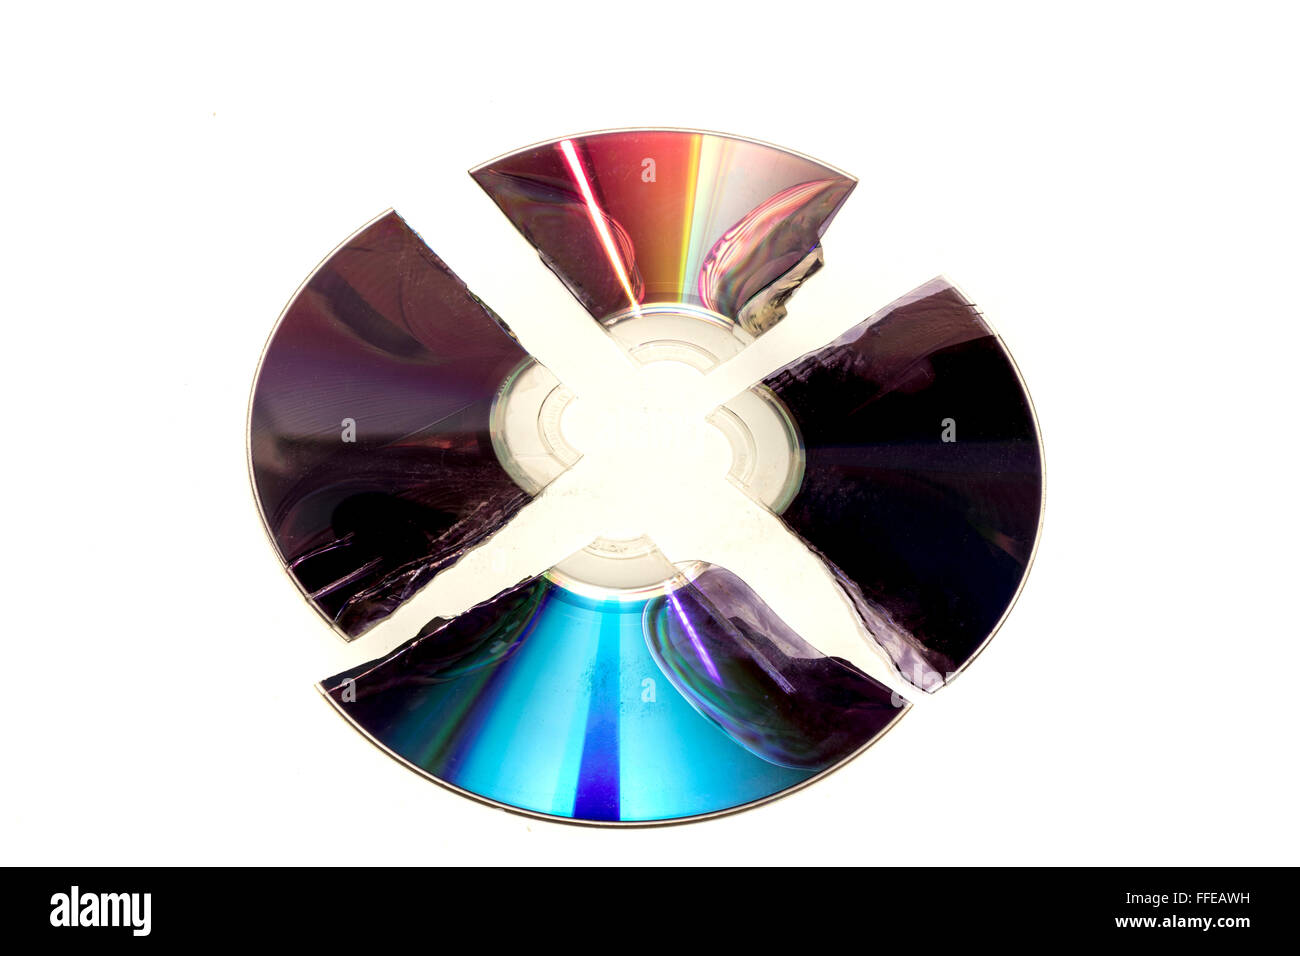 A broken DVD Stock Photo - Alamy